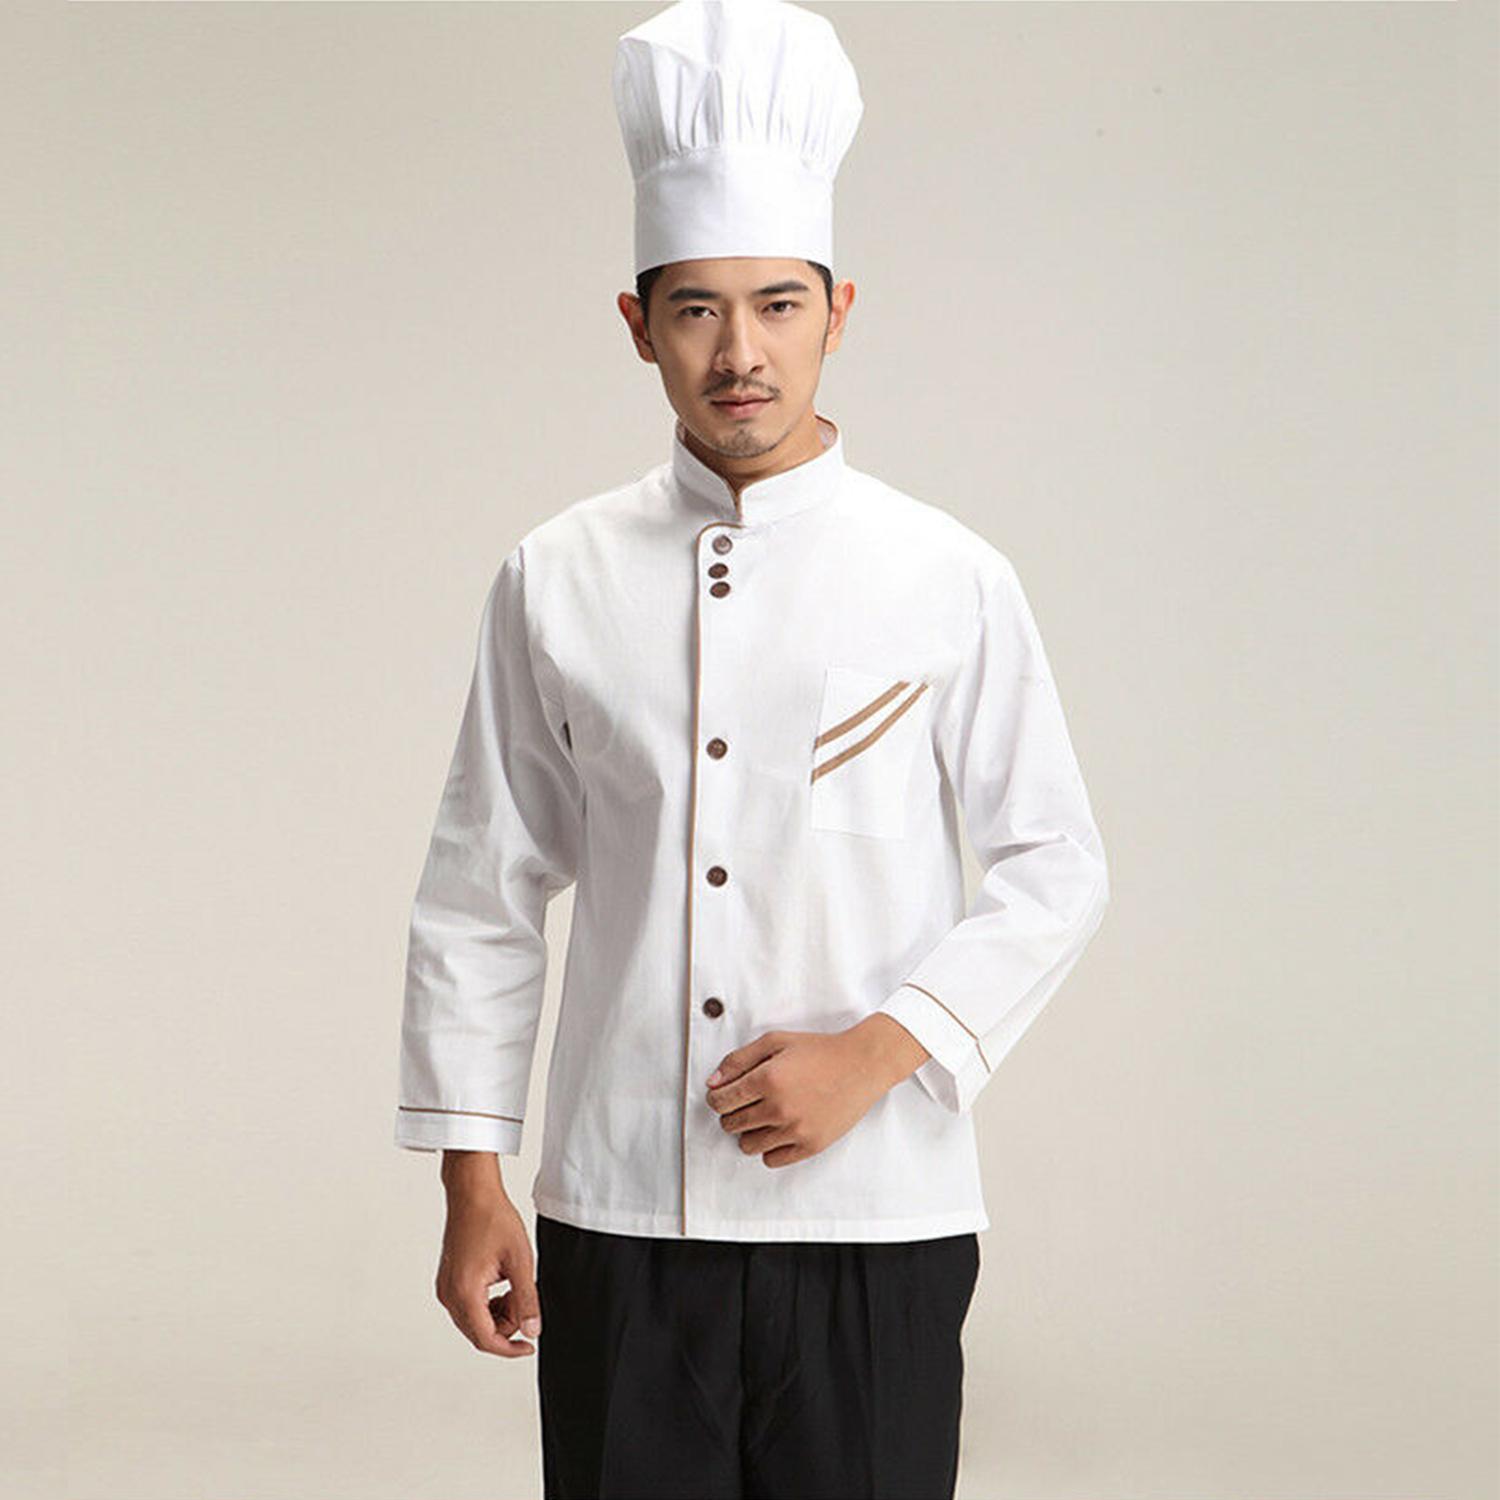 Men's Tops Coat Kitchen Long Sleeve Casual Tops Chef Jacket Coat Uniform 